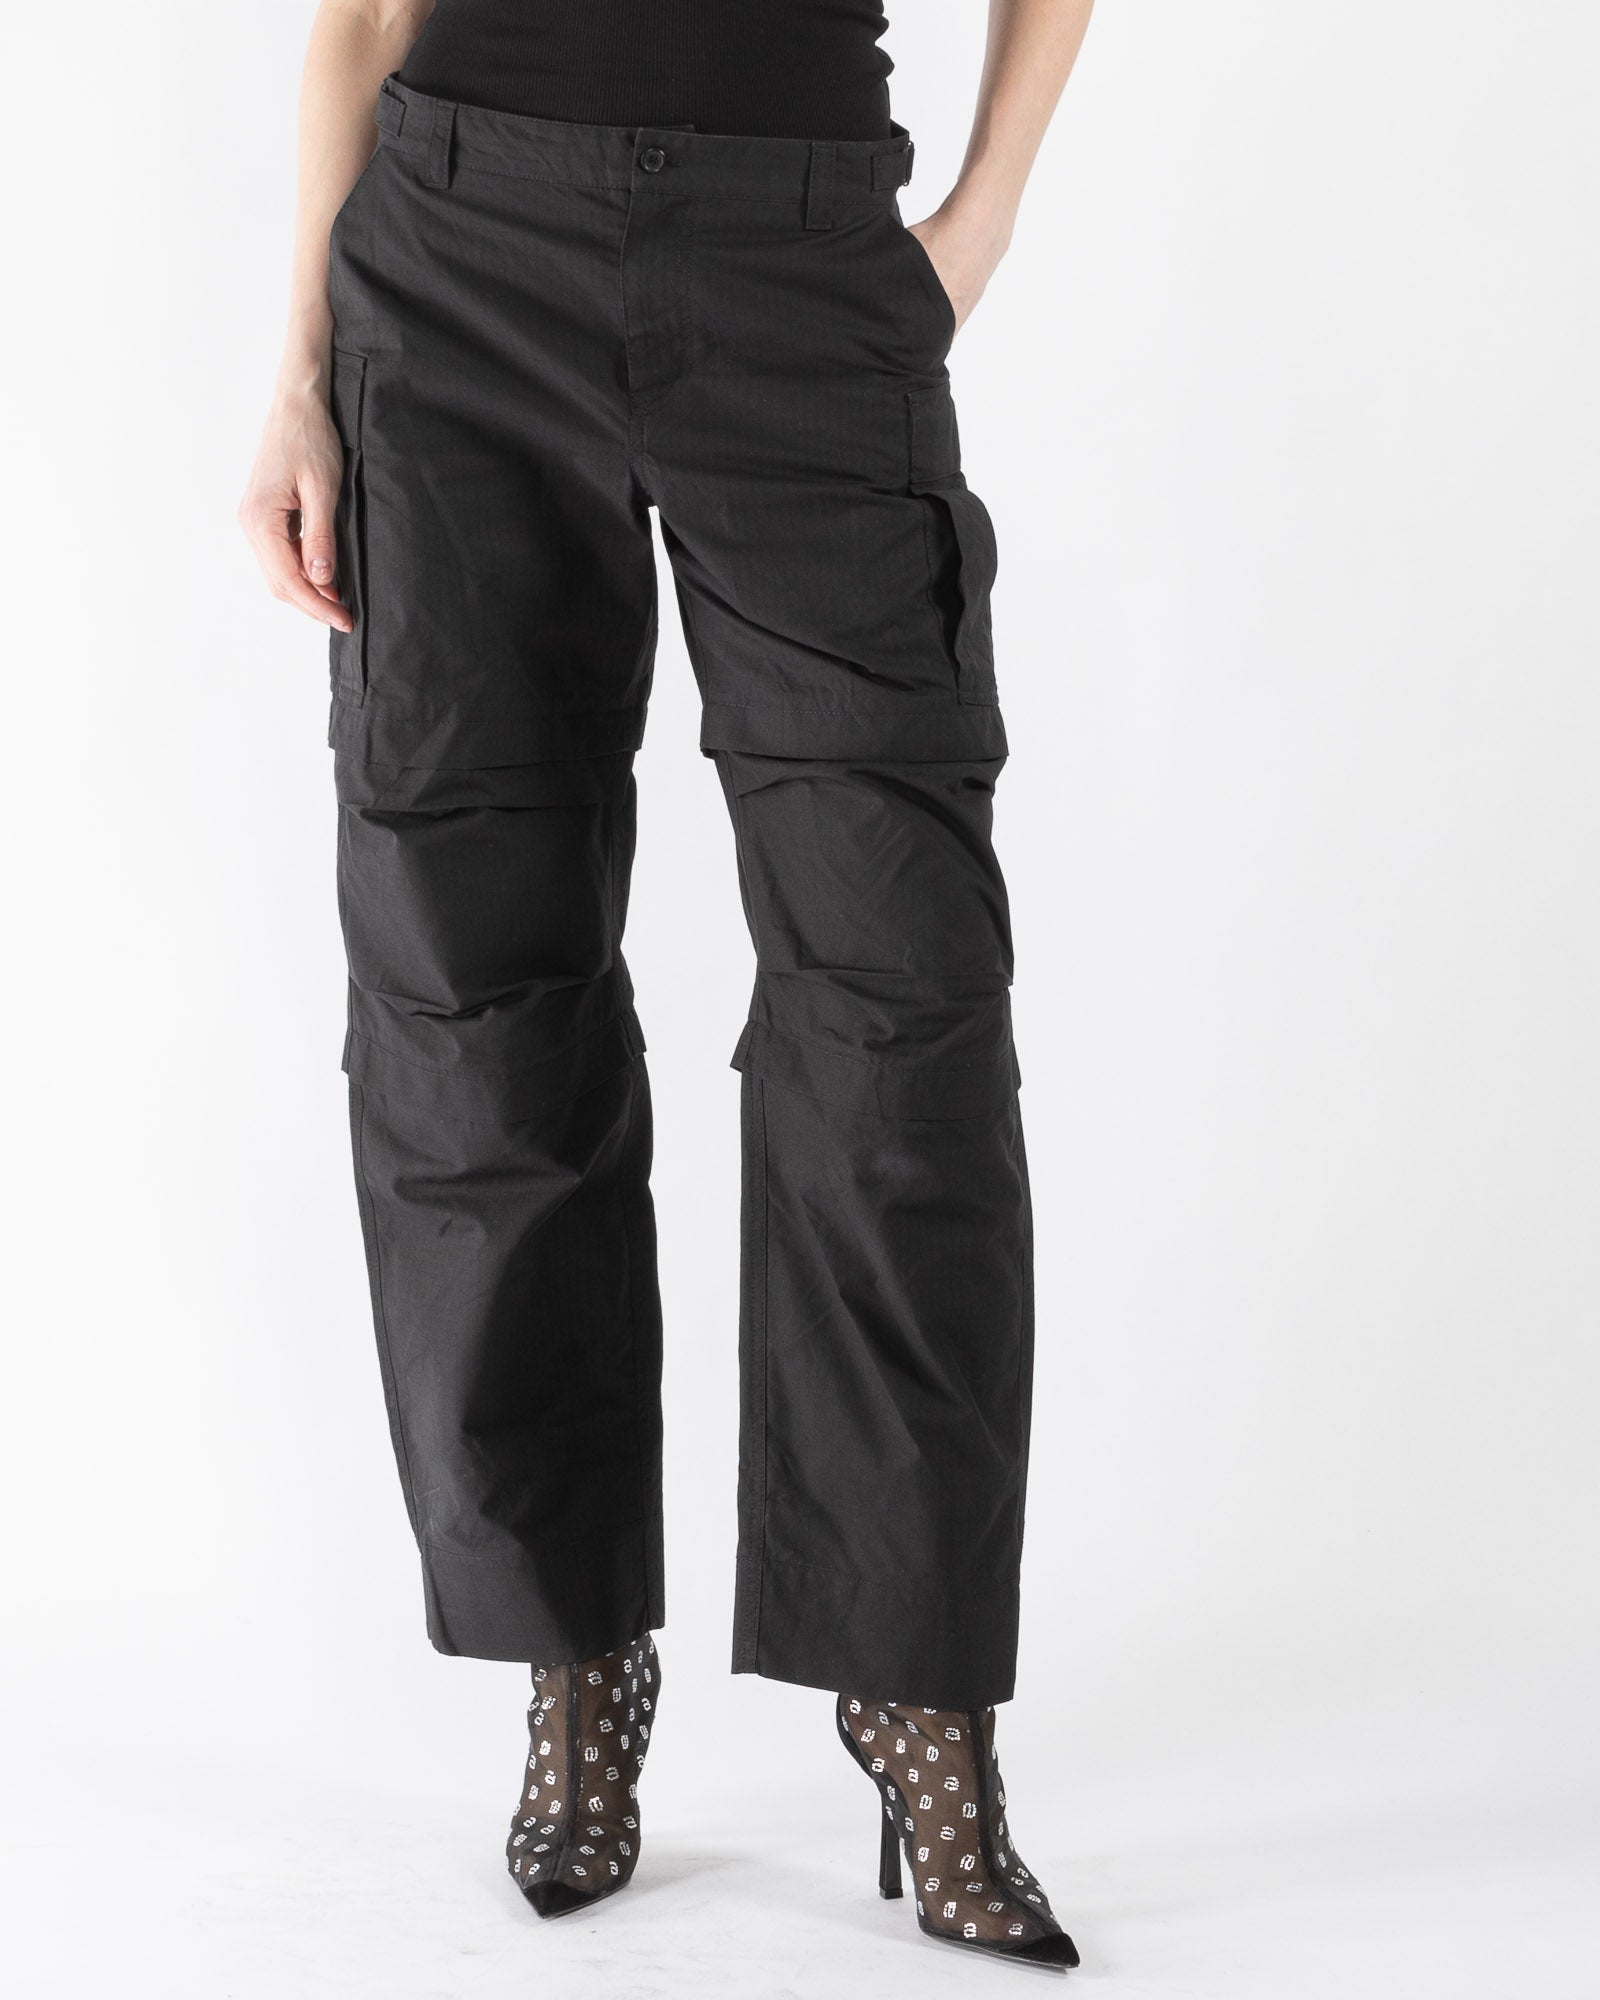 Buy Urban Edge Black Cargo Pants By weave wardrobe at Best Price